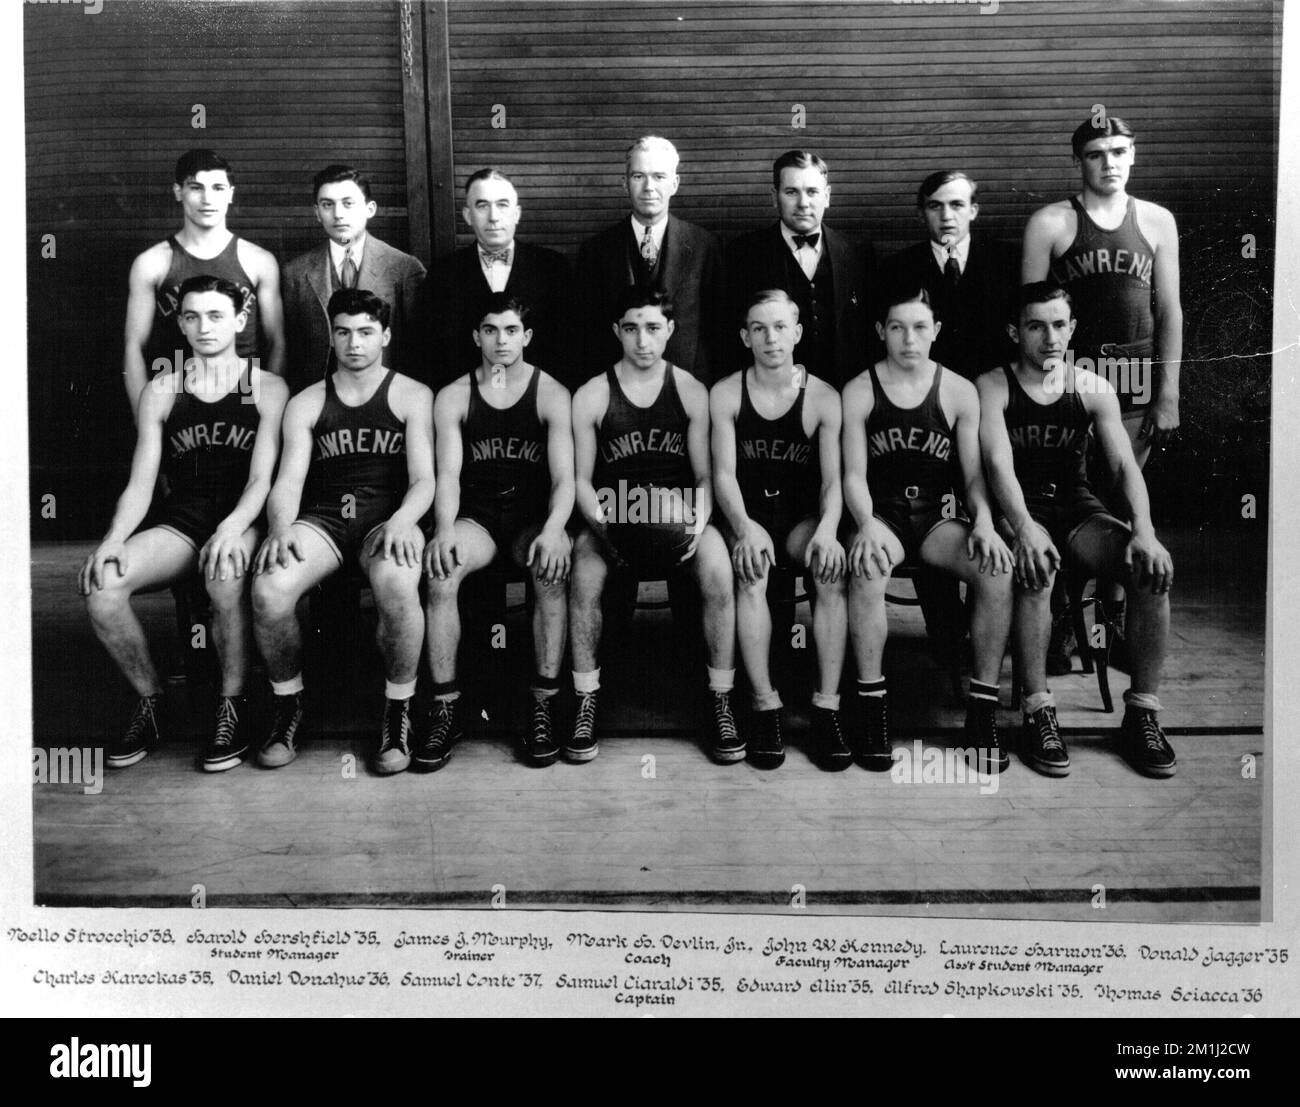 1935 Lawrence High School basketball team , Basketball players, Lawrence High School Lawrence, Mass. Stock Photo